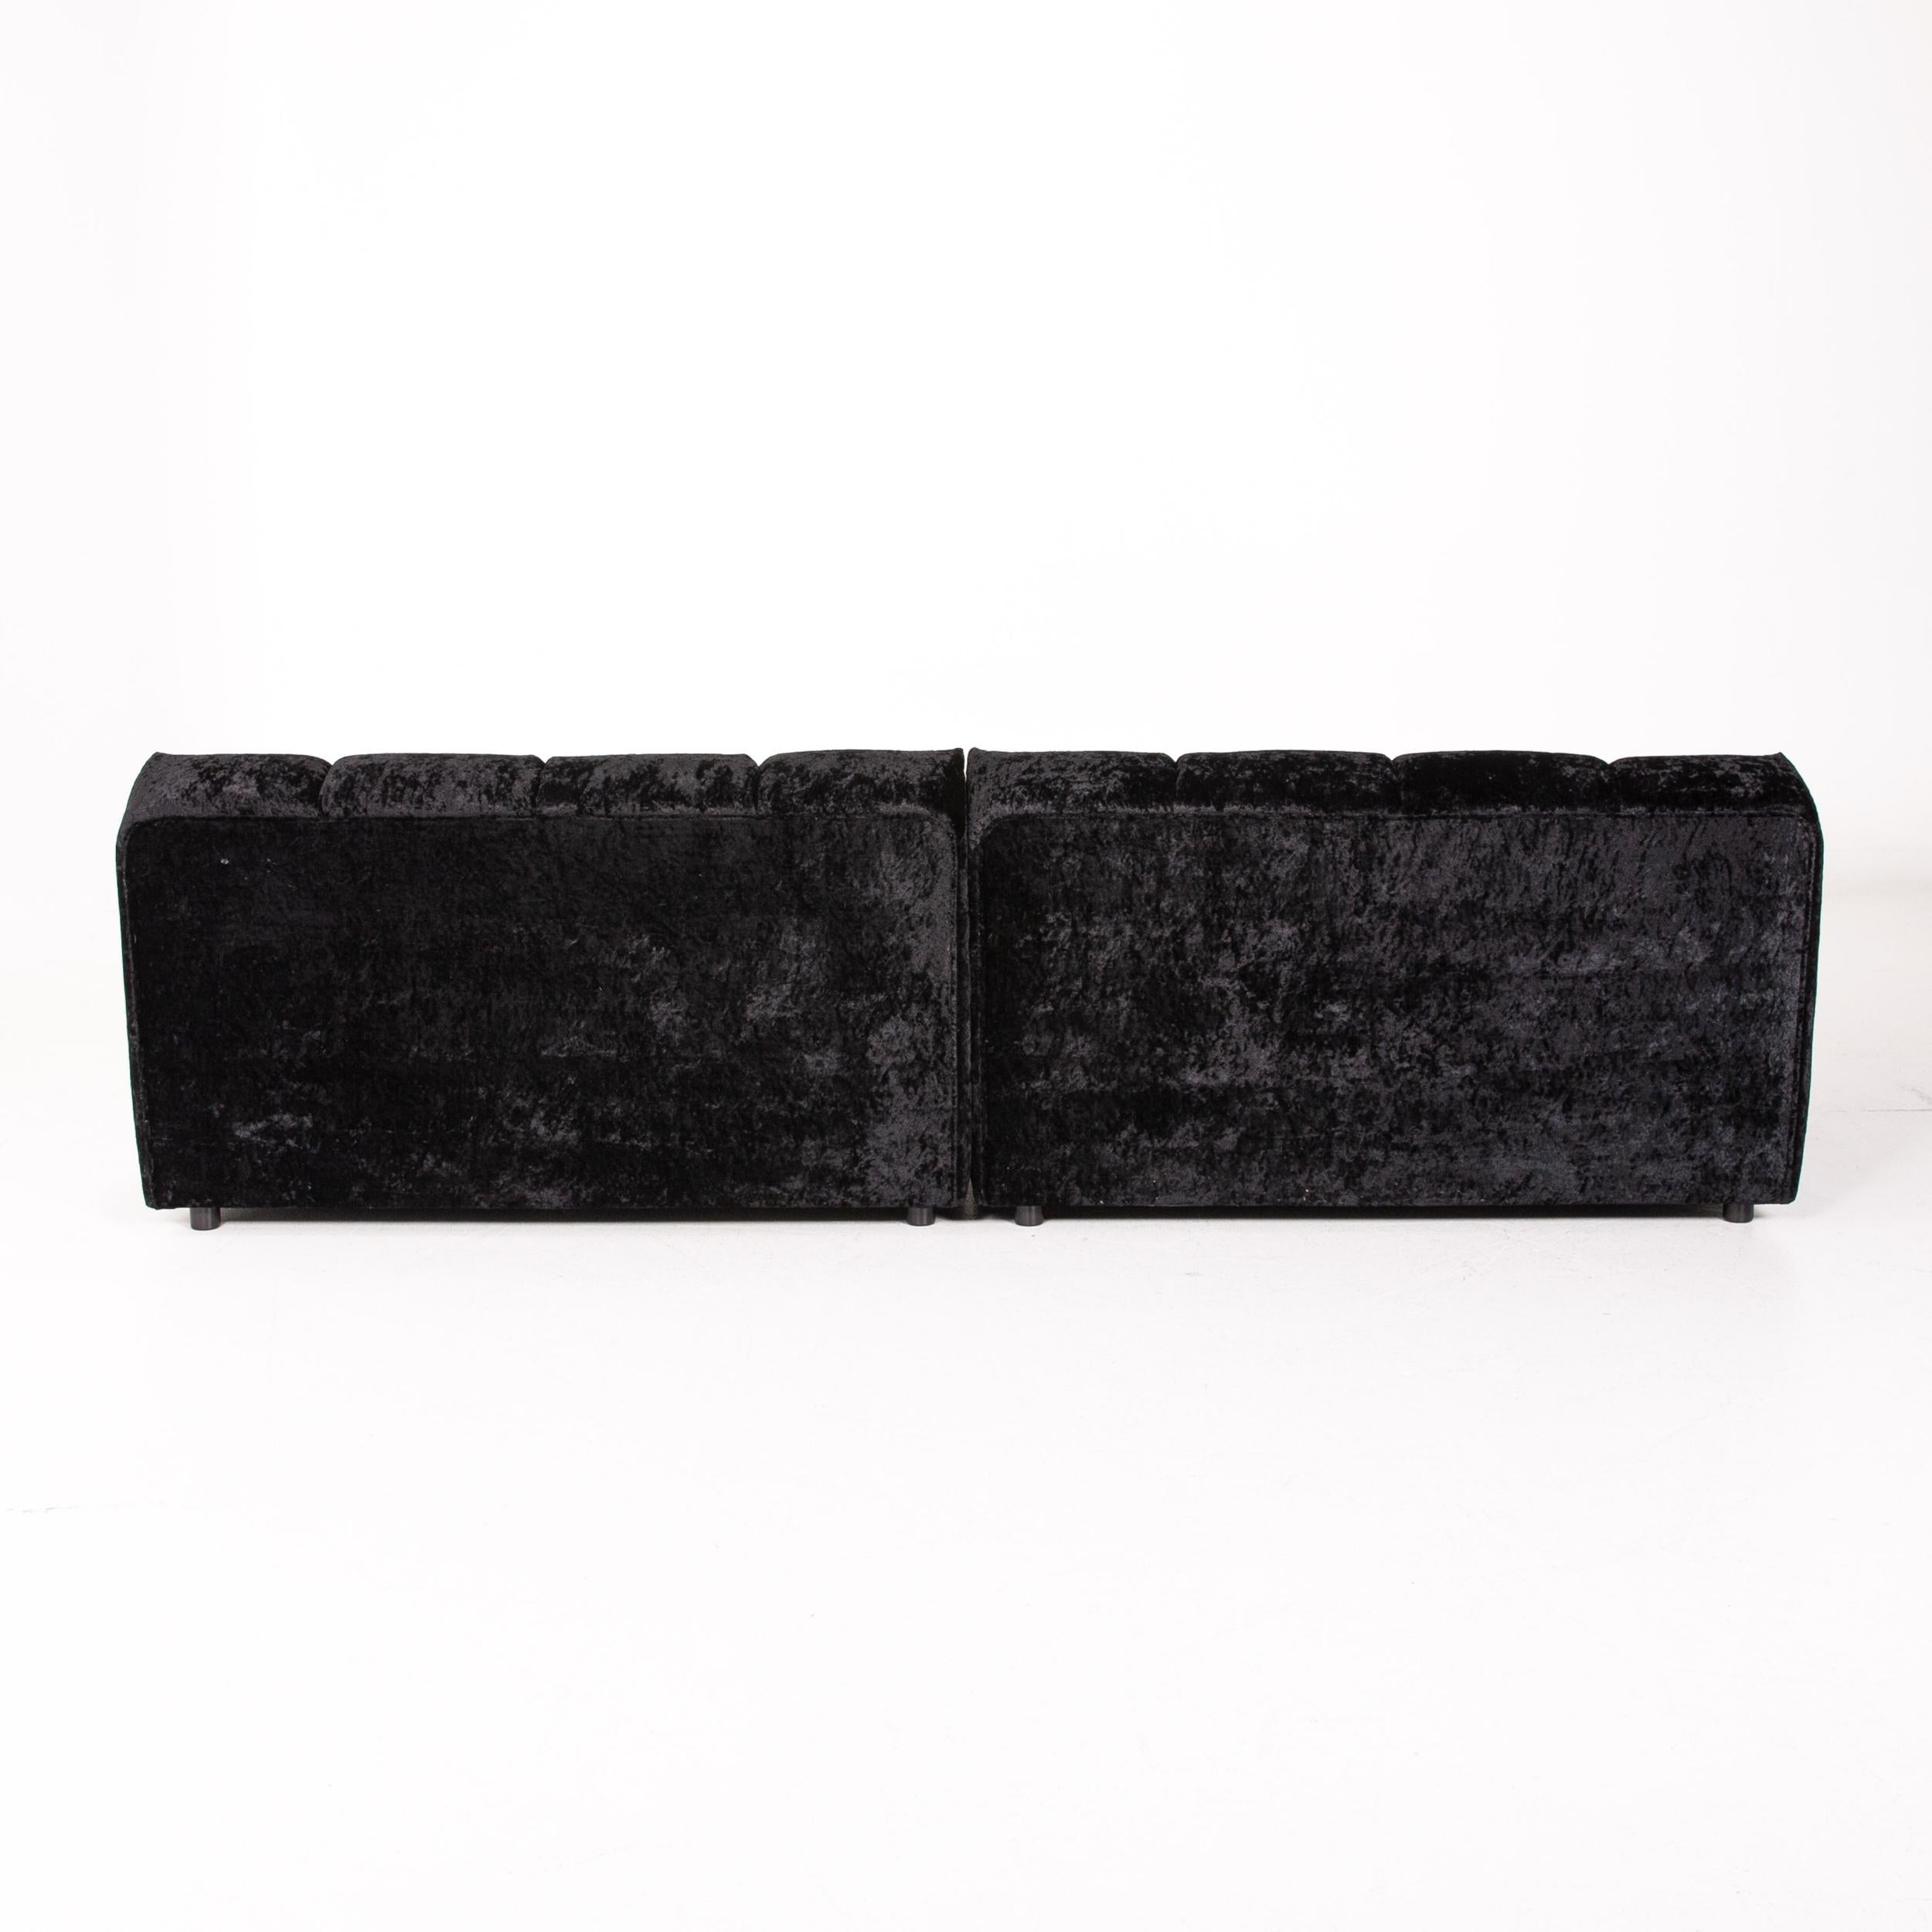 Bretz Ocean 7 Velvet Fabric Corner Sofa Black Sofa Couch Modular 3